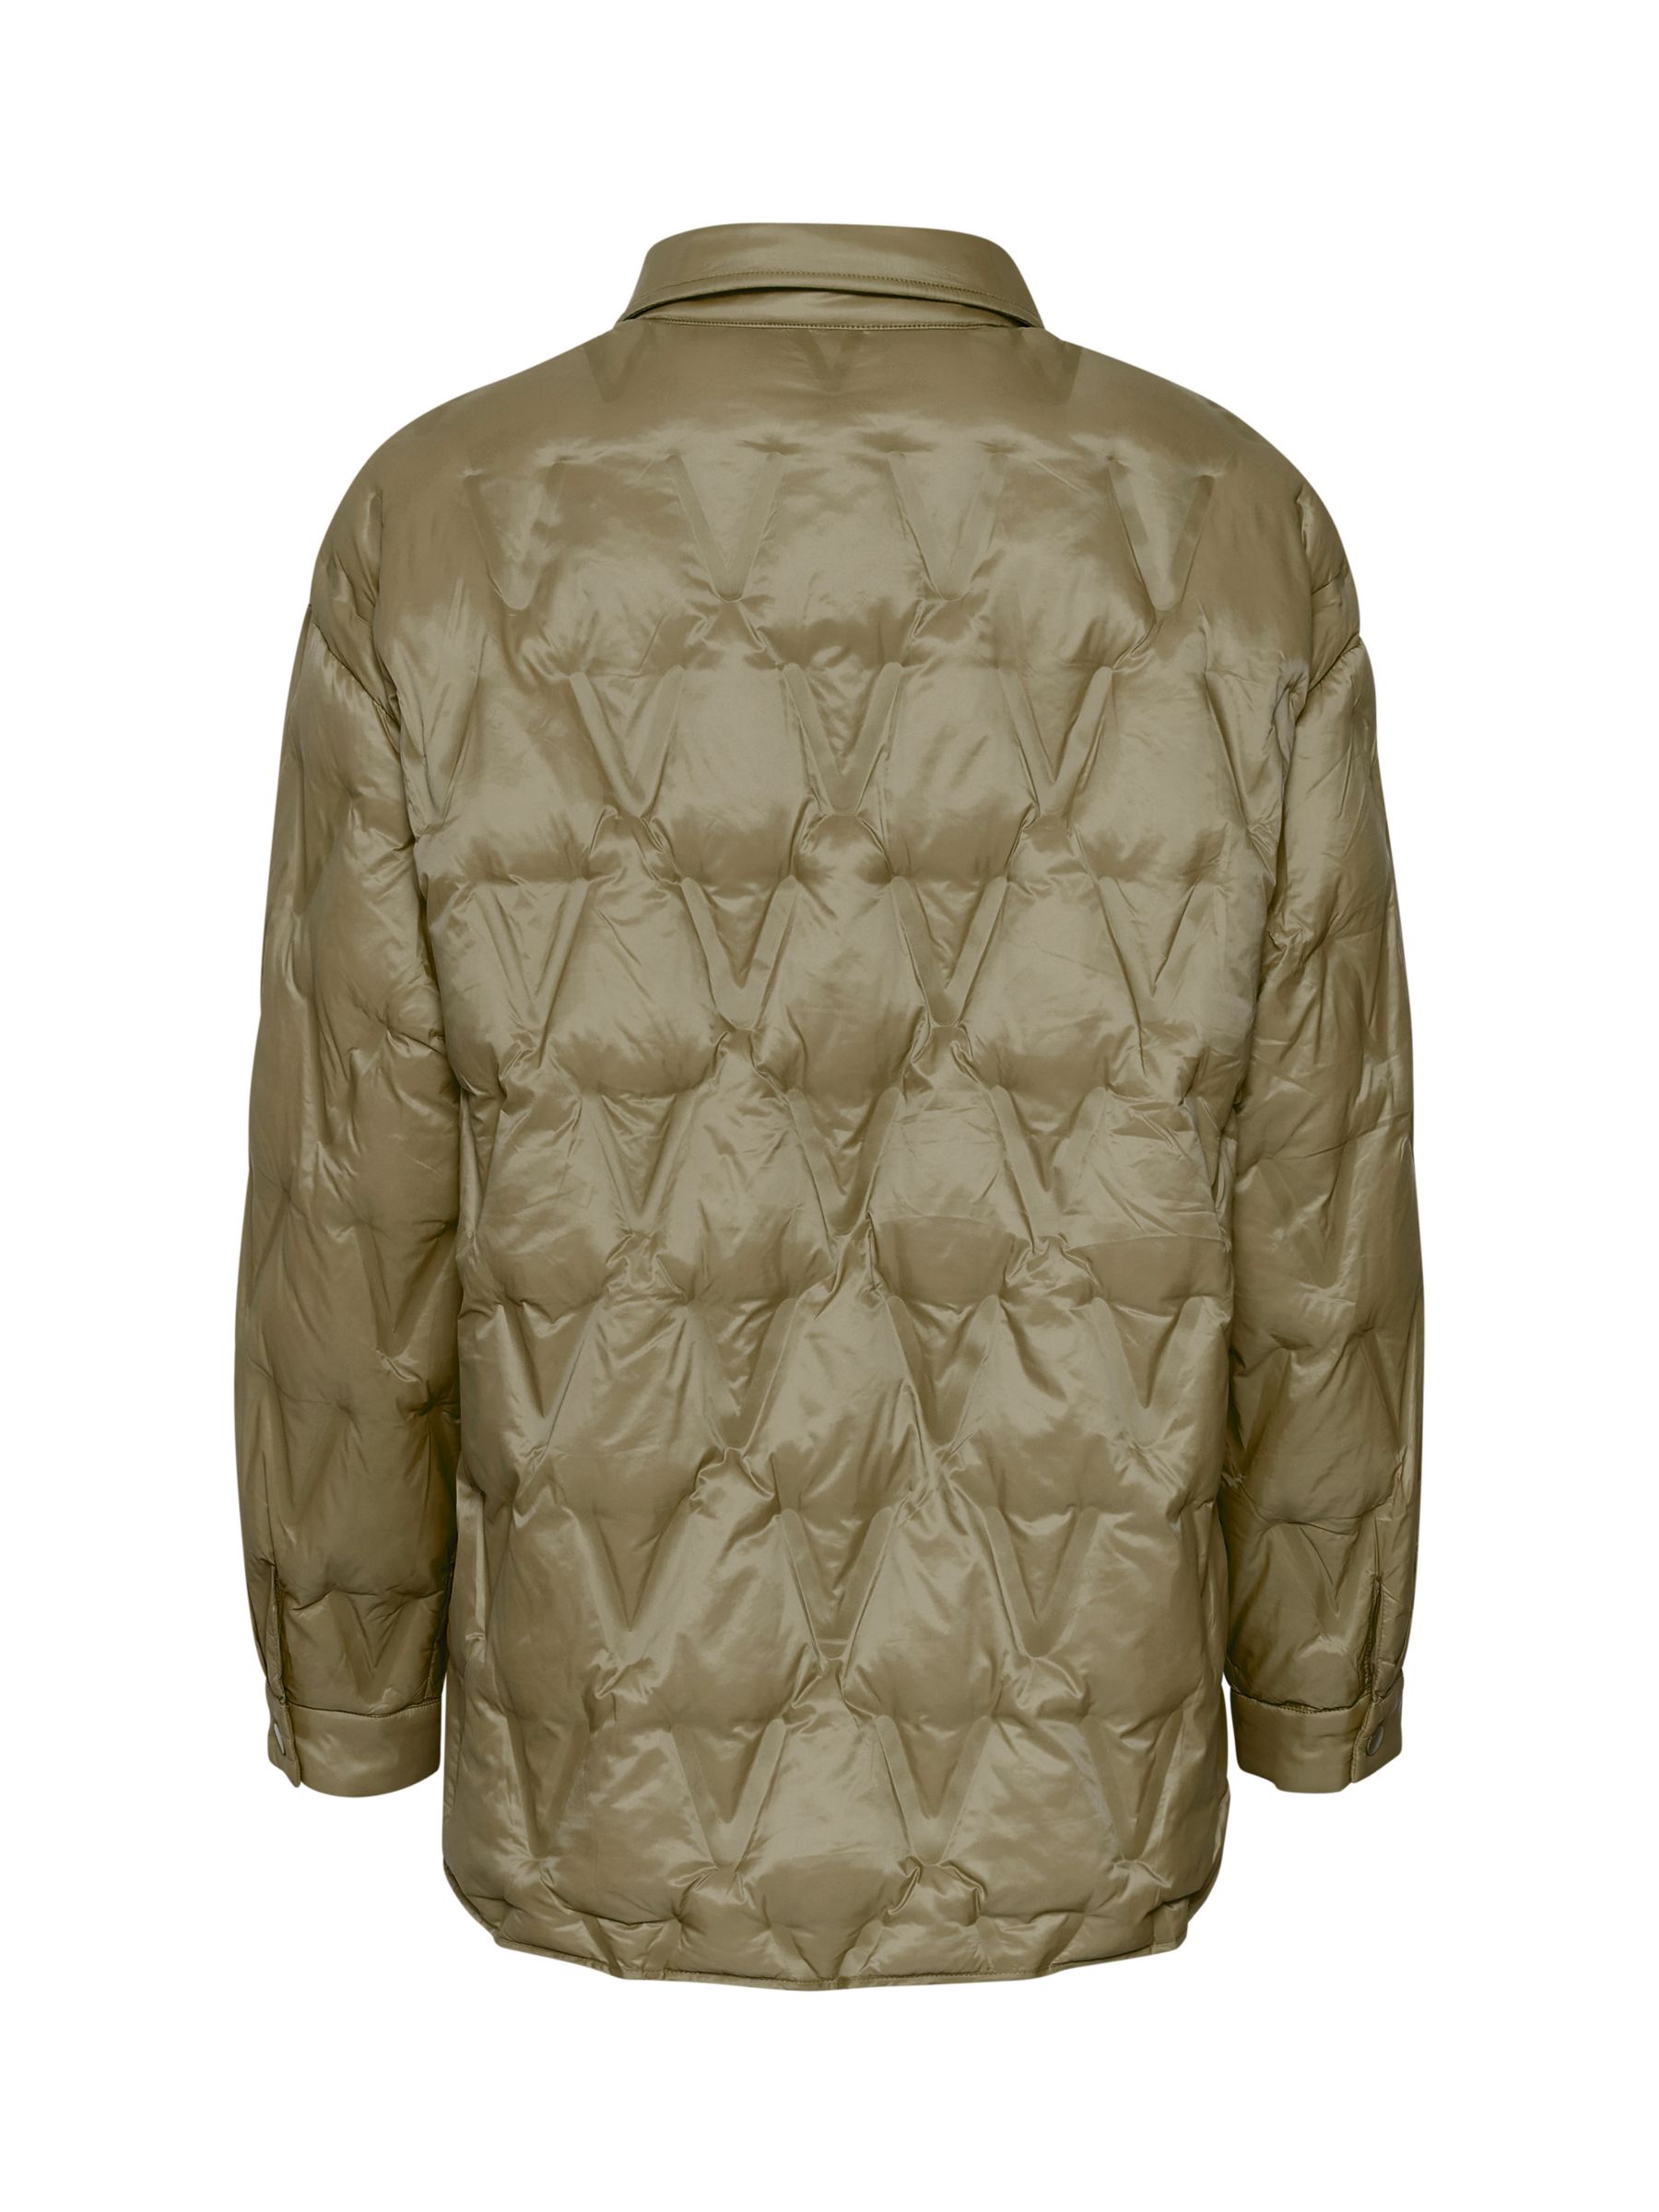 Buy Saint Tropez Caddy Padded Button Jacket, Burnt Olive Online at johnlewis.com